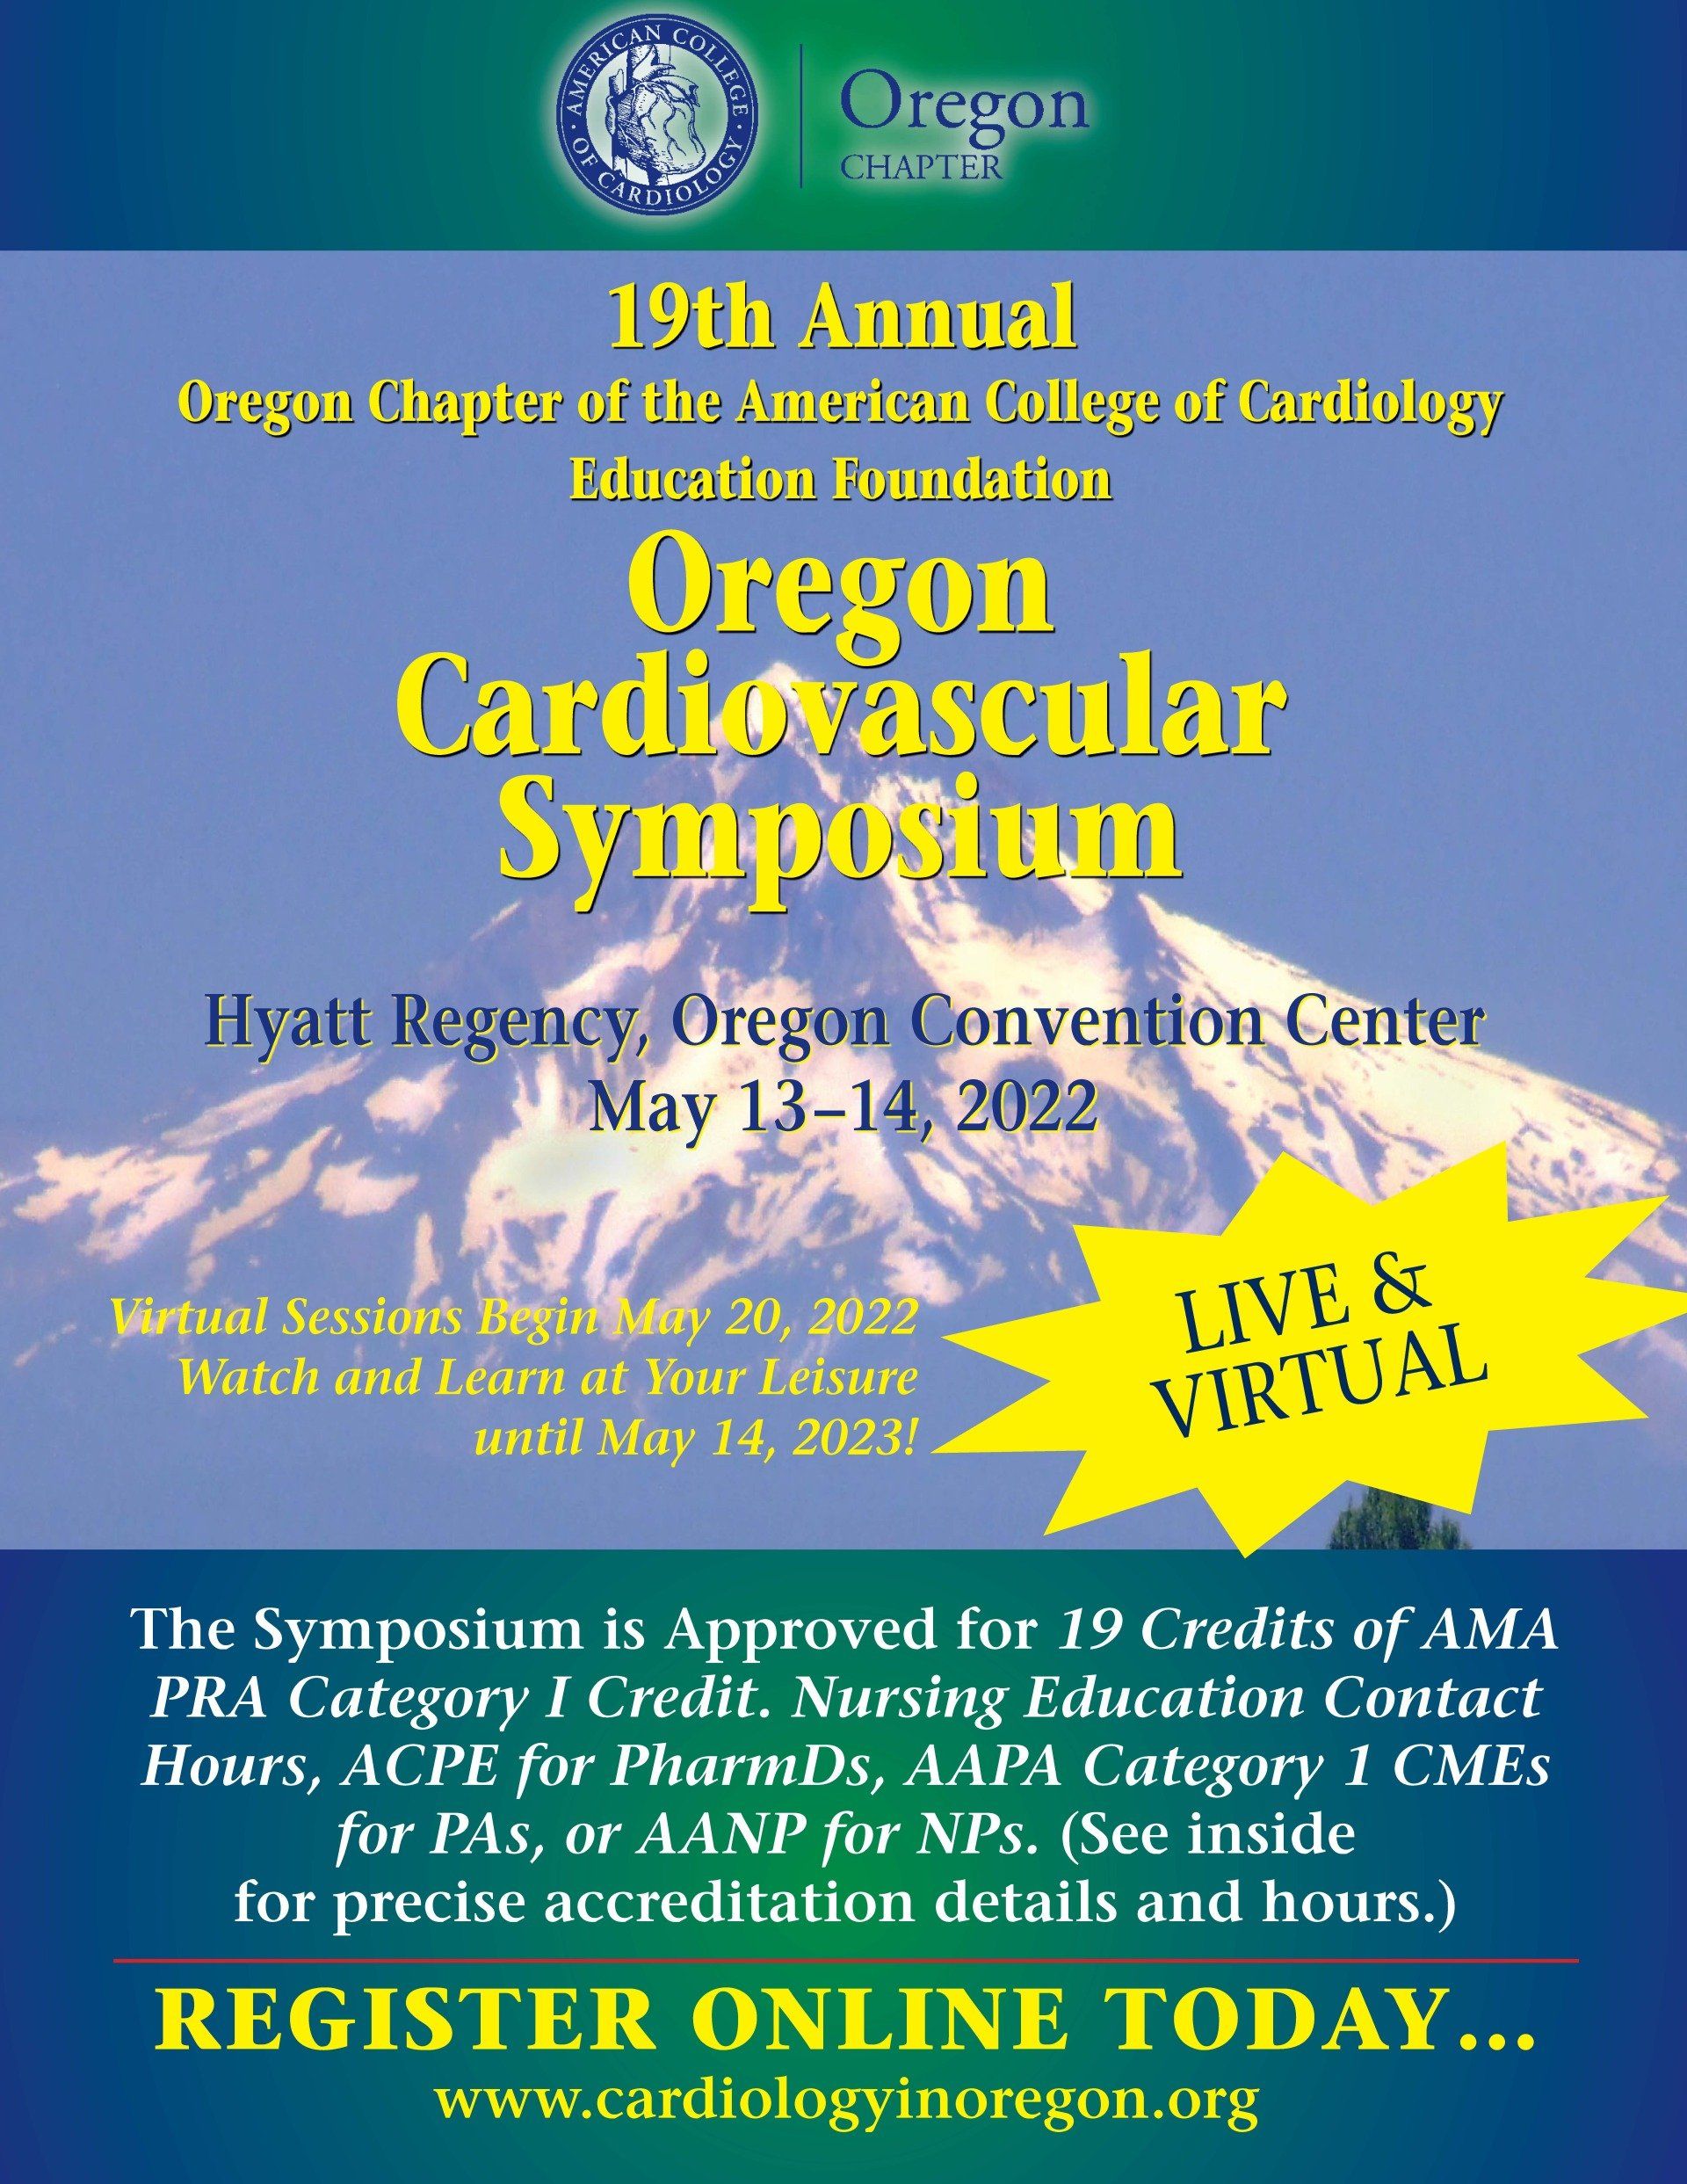 Oregon Cardiovascular Symposium - Vancouver, WA - IMC360 Association Management